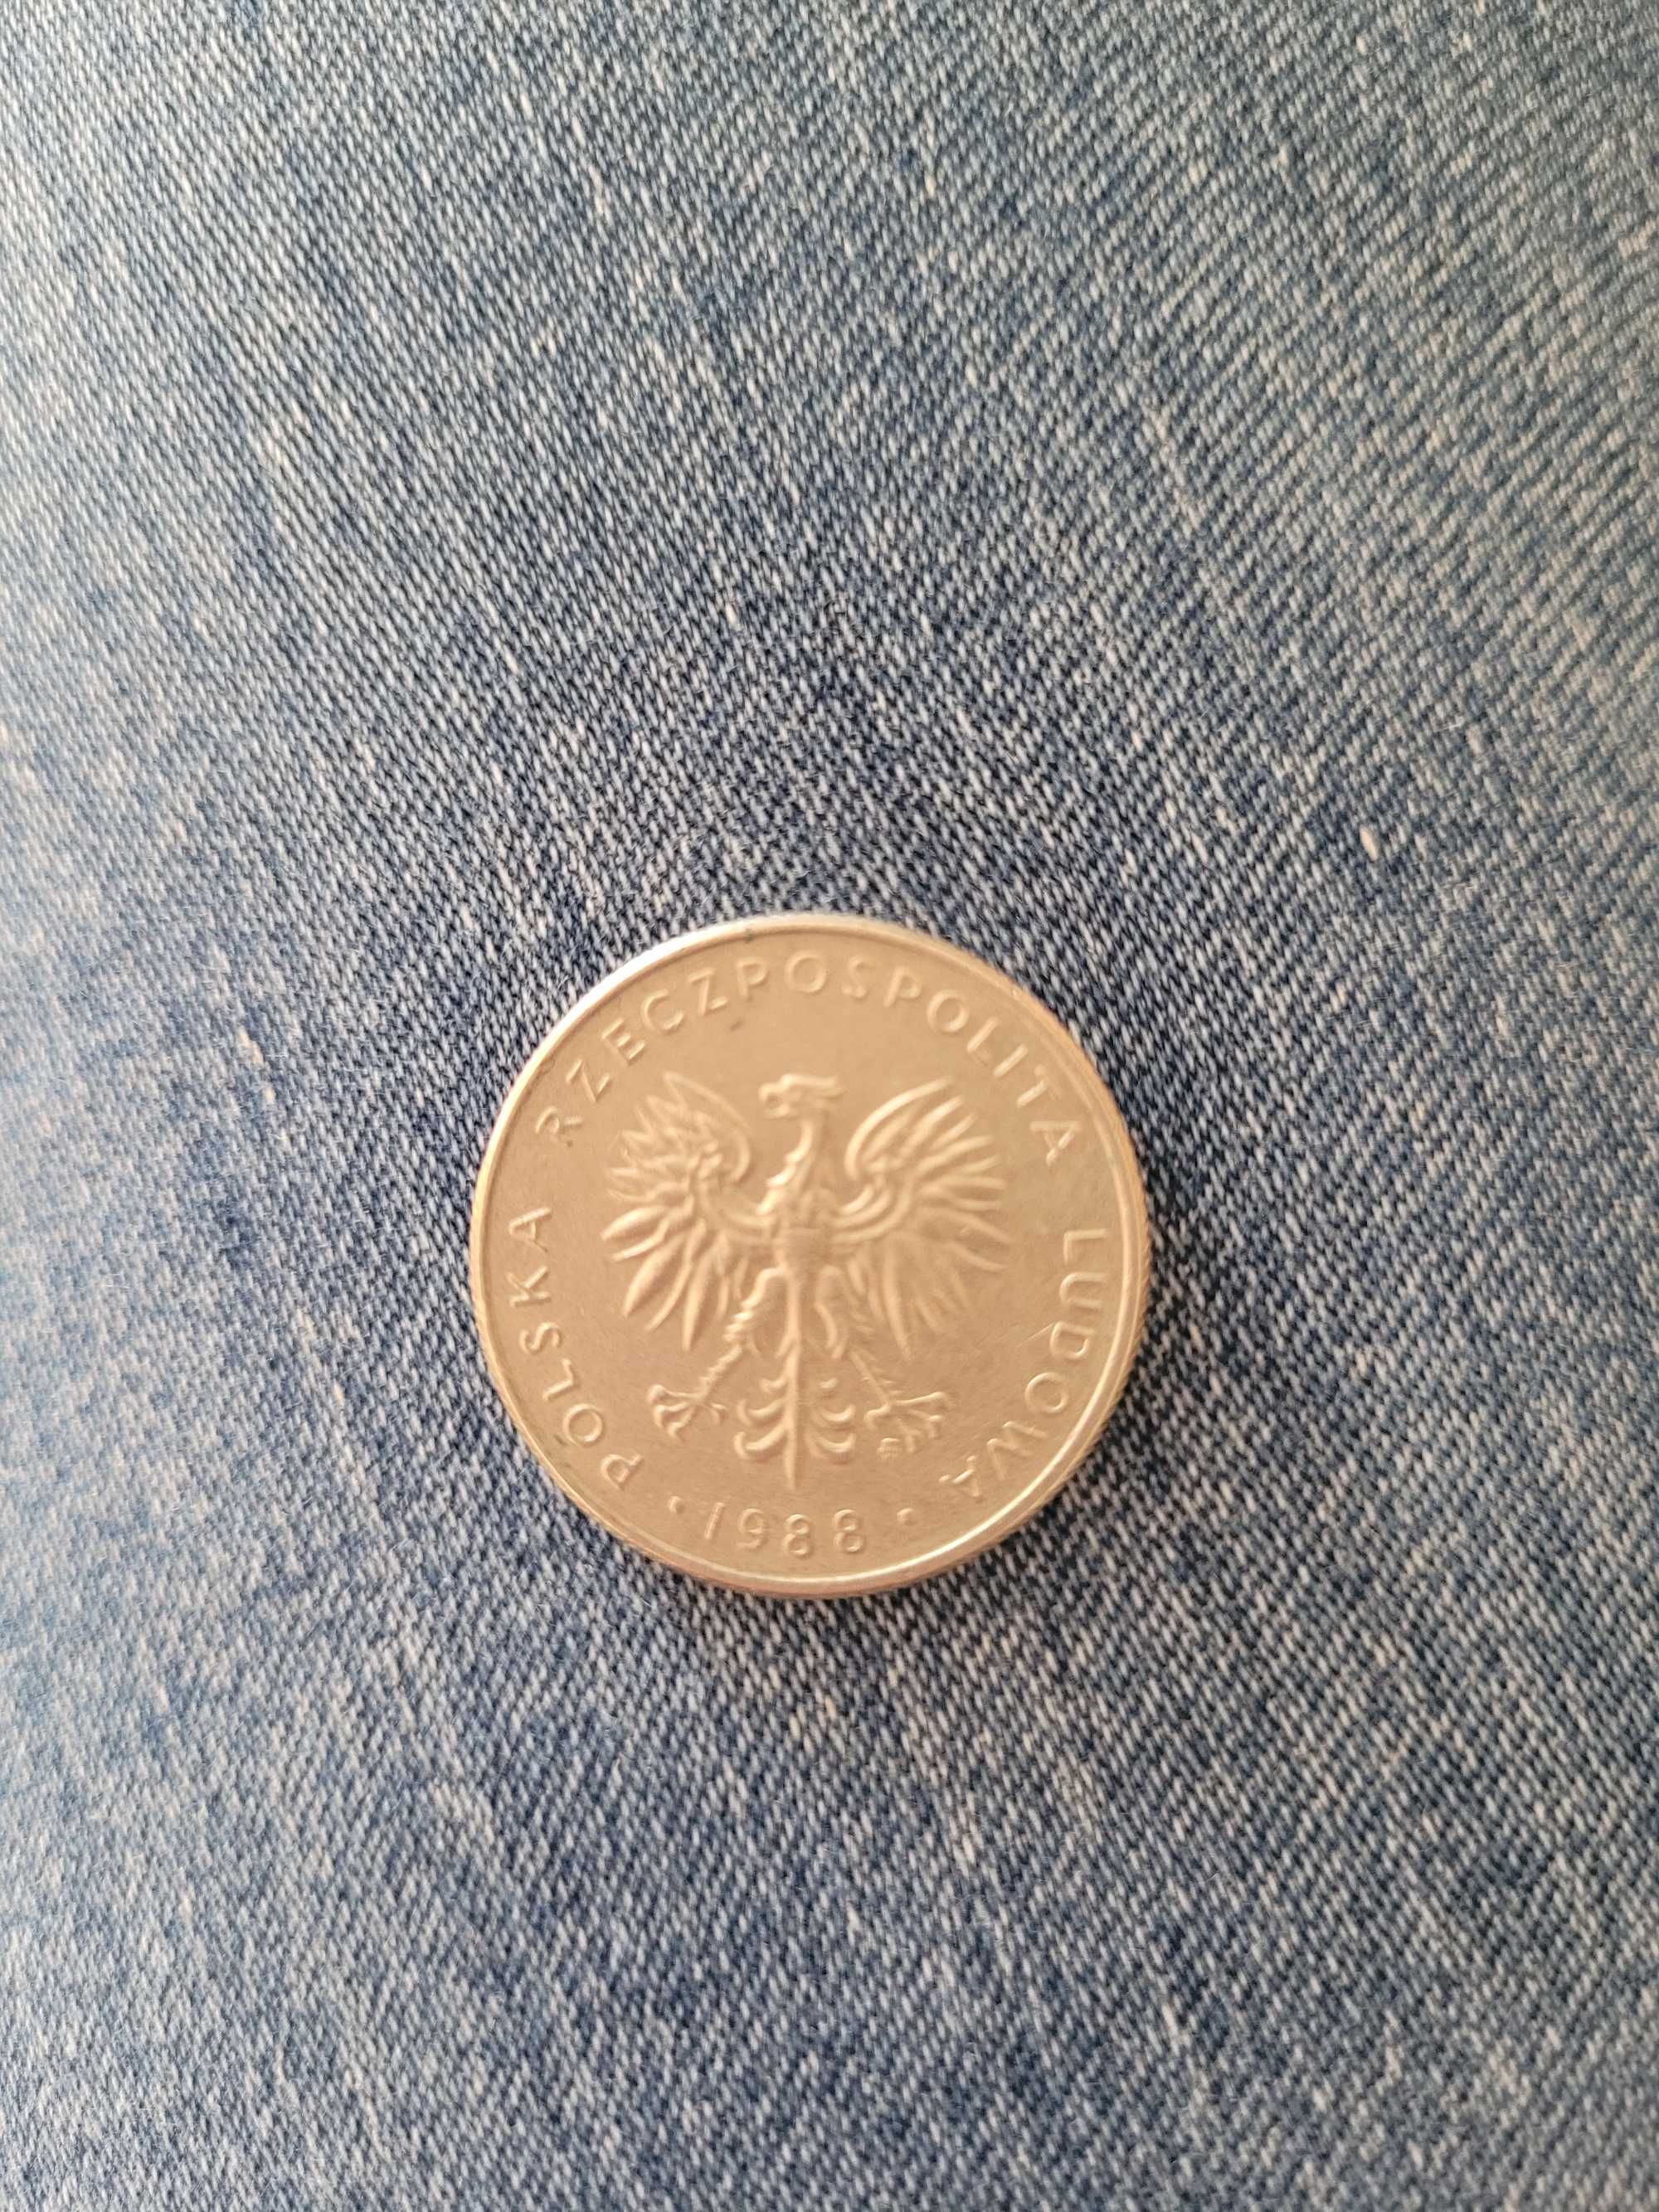 Moneta 10zł z 1988r.